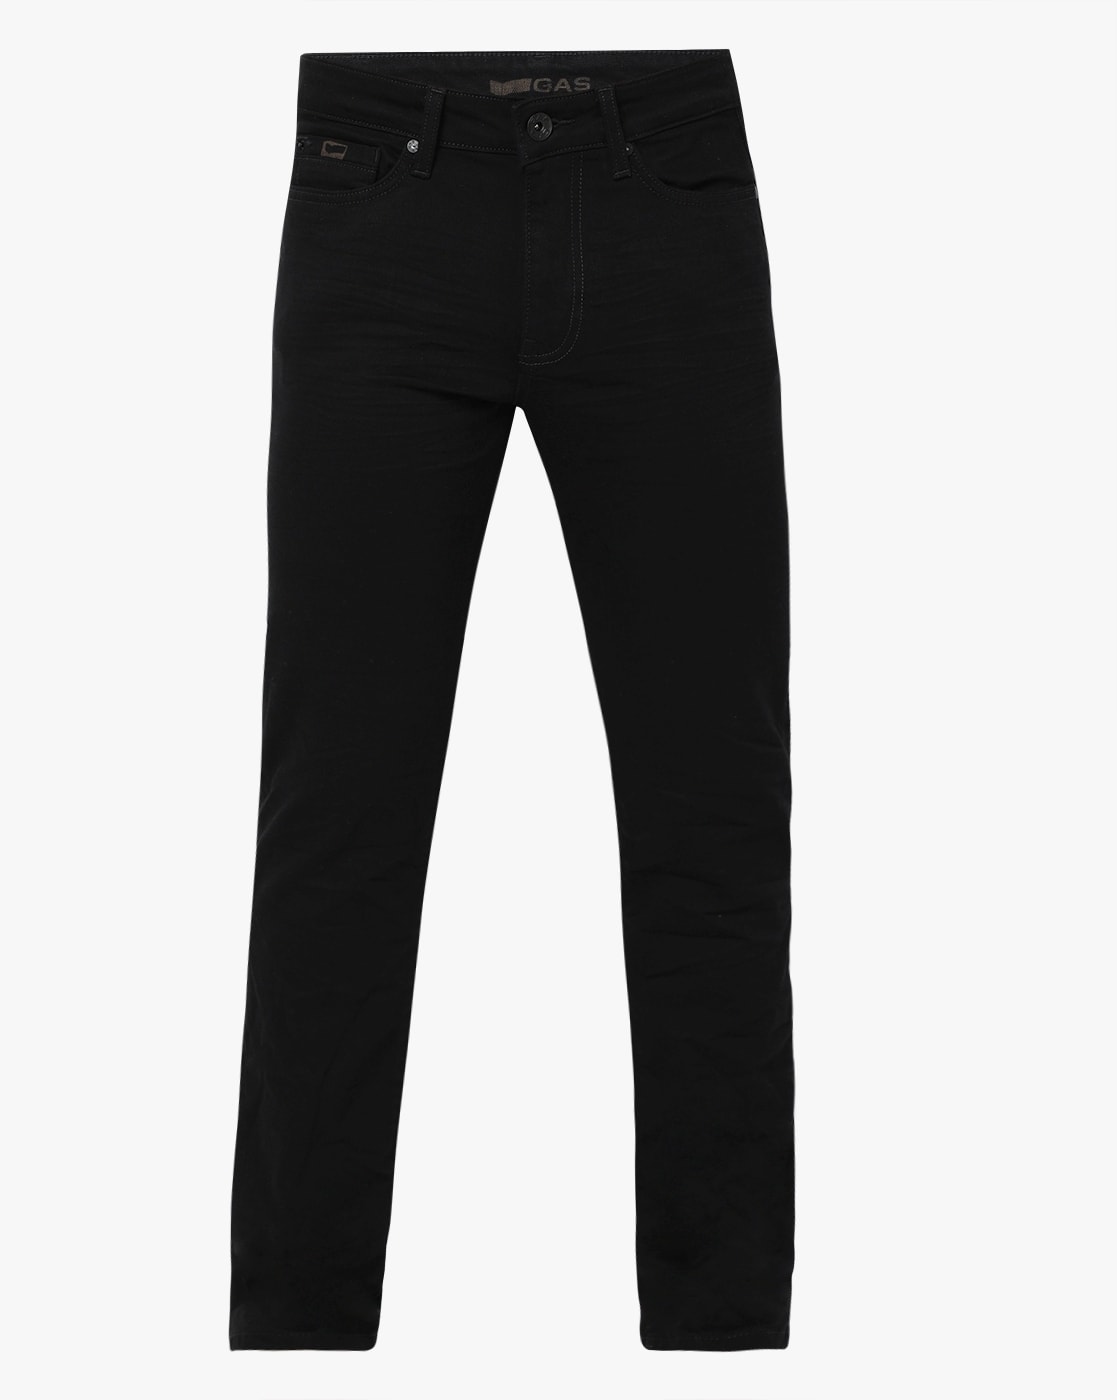 Gas Black Denim Designer Jeans, Waist Size: 28 at Rs 570/piece in Mumbai |  ID: 19920396562